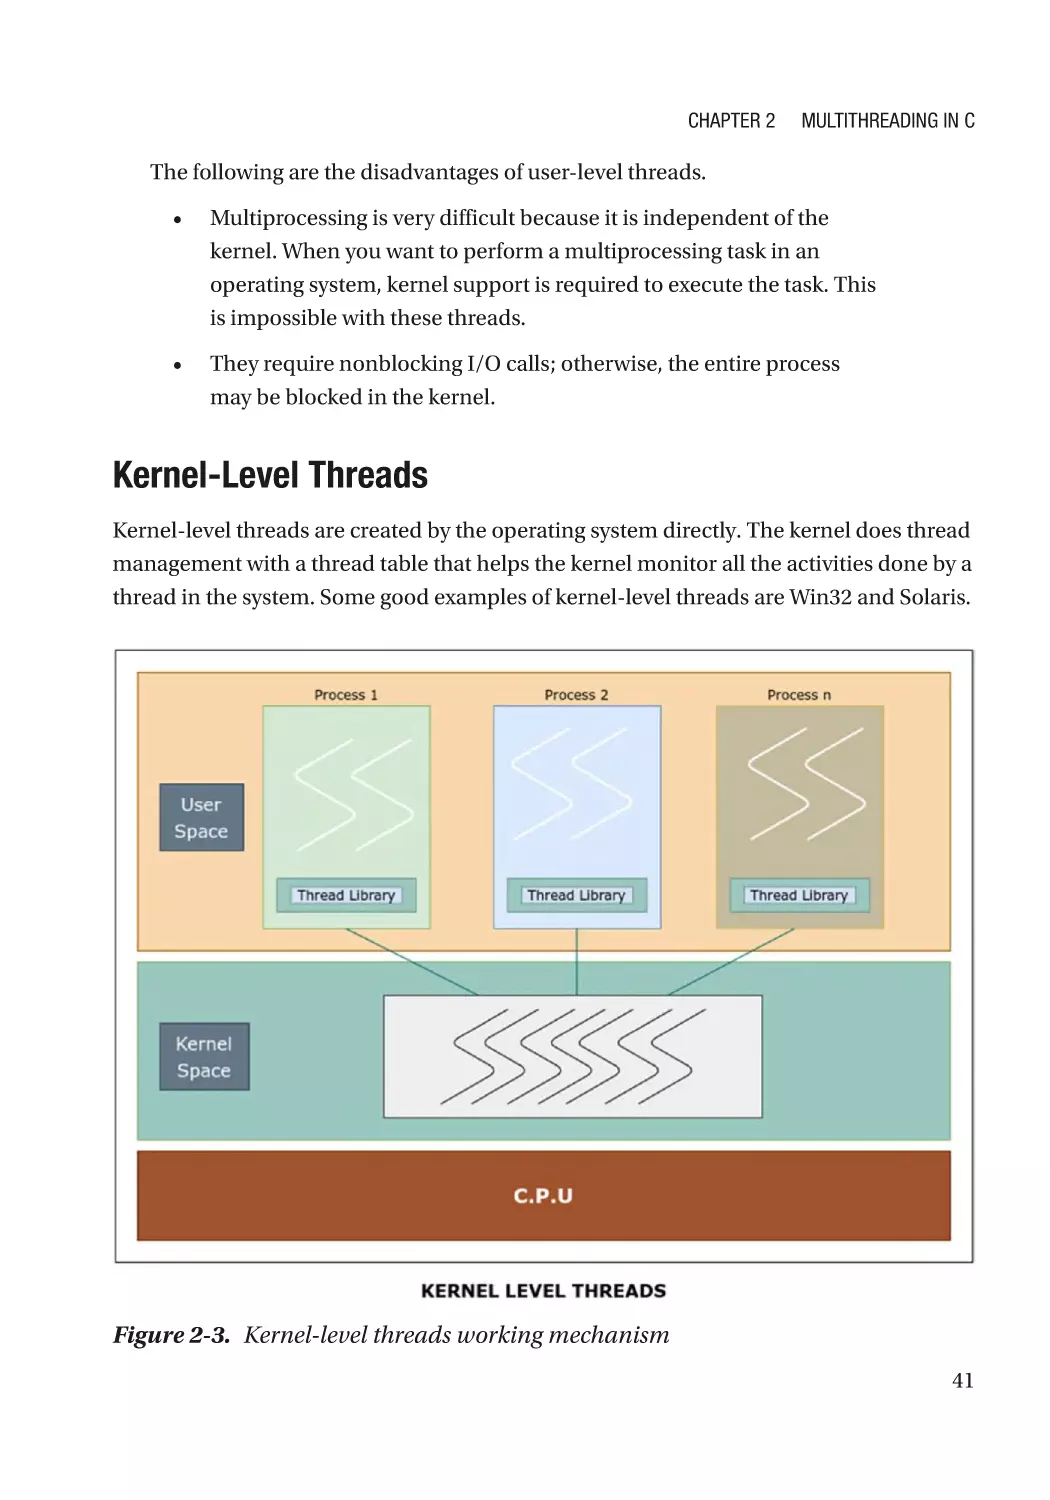 Kernel-Level Threads